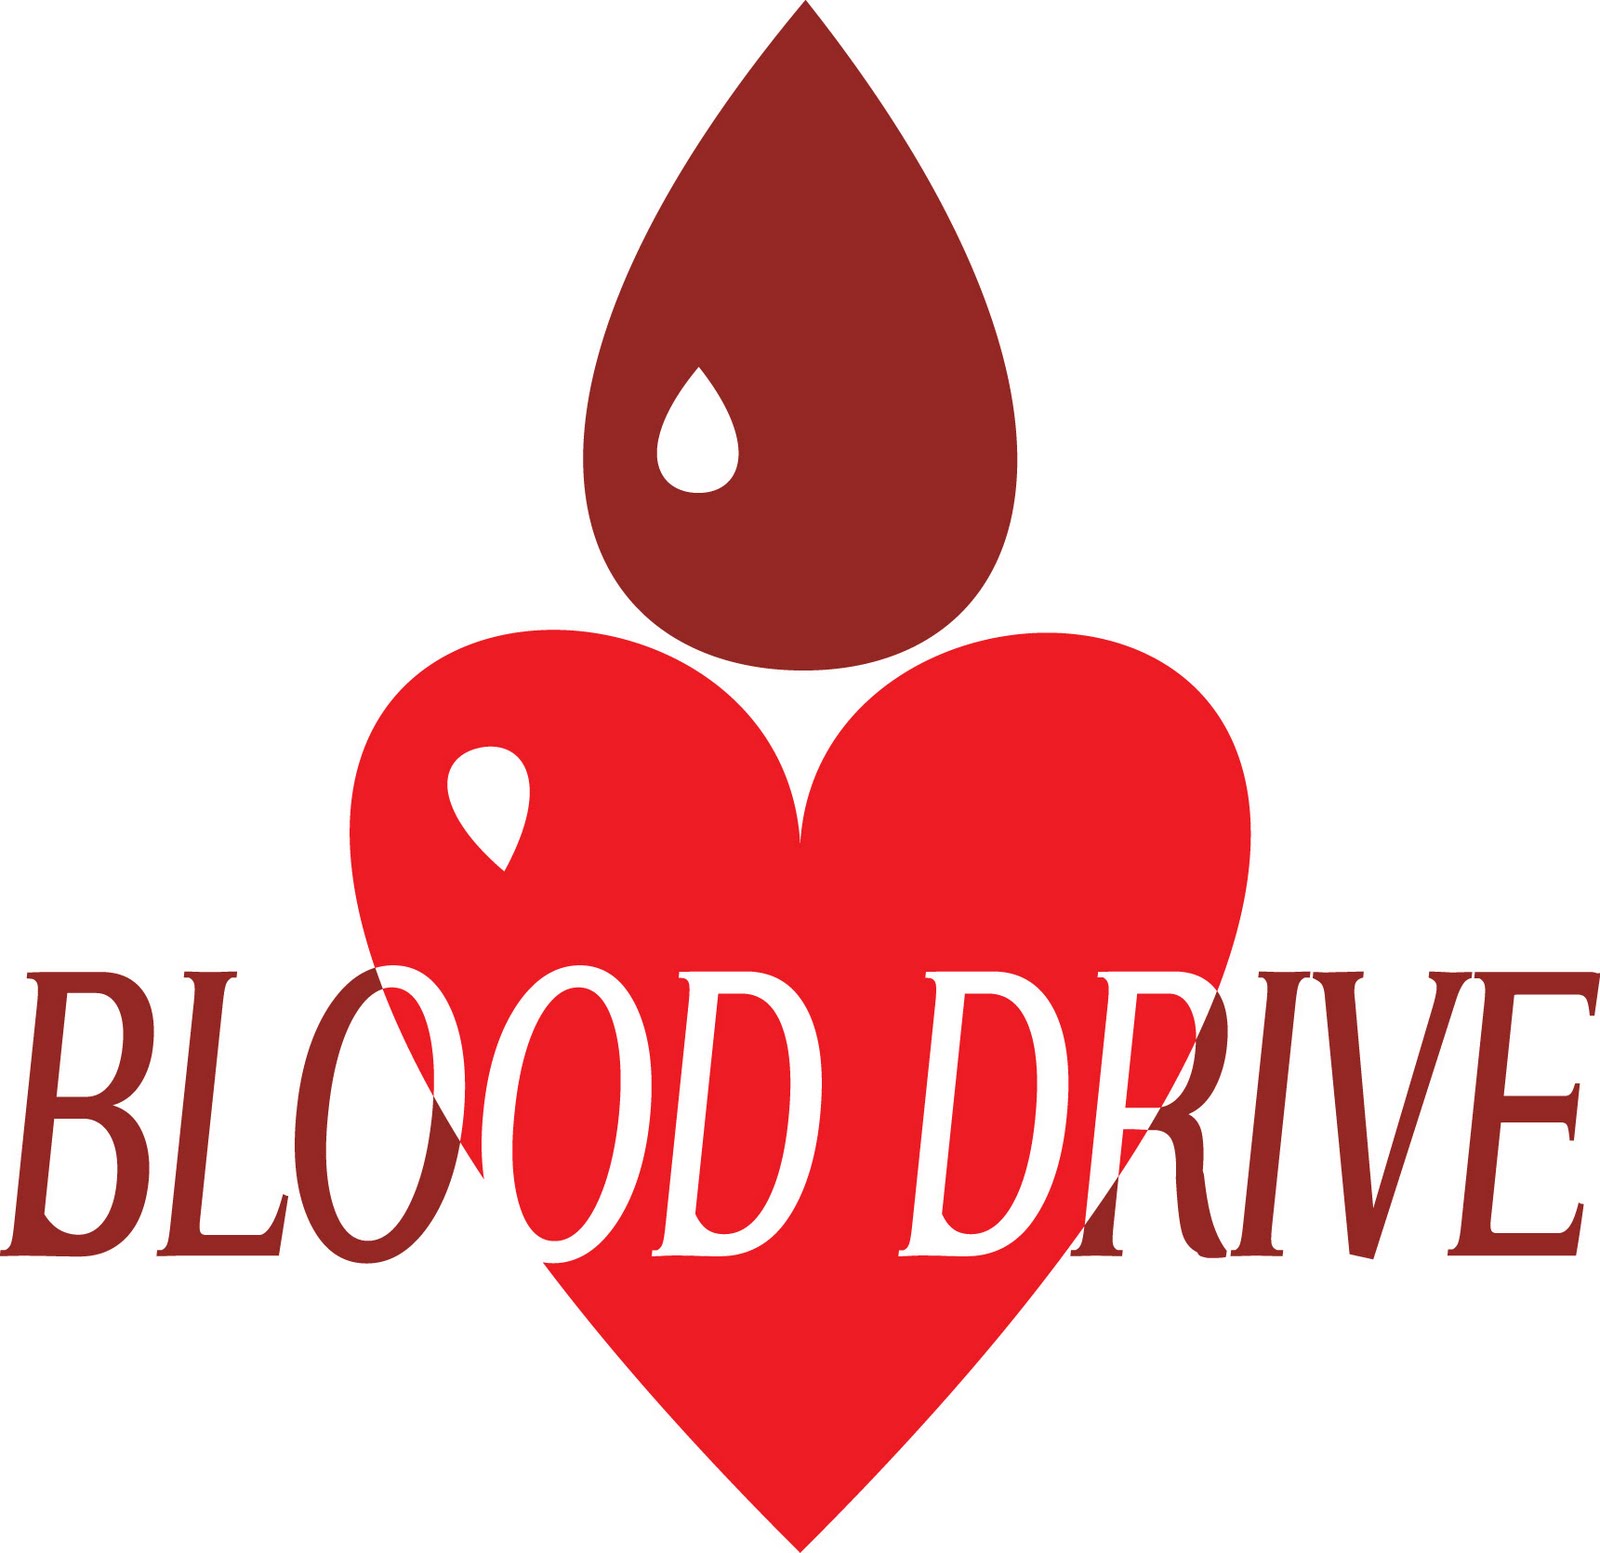 ... Blood drive thank you cli - Blood Drive Clip Art